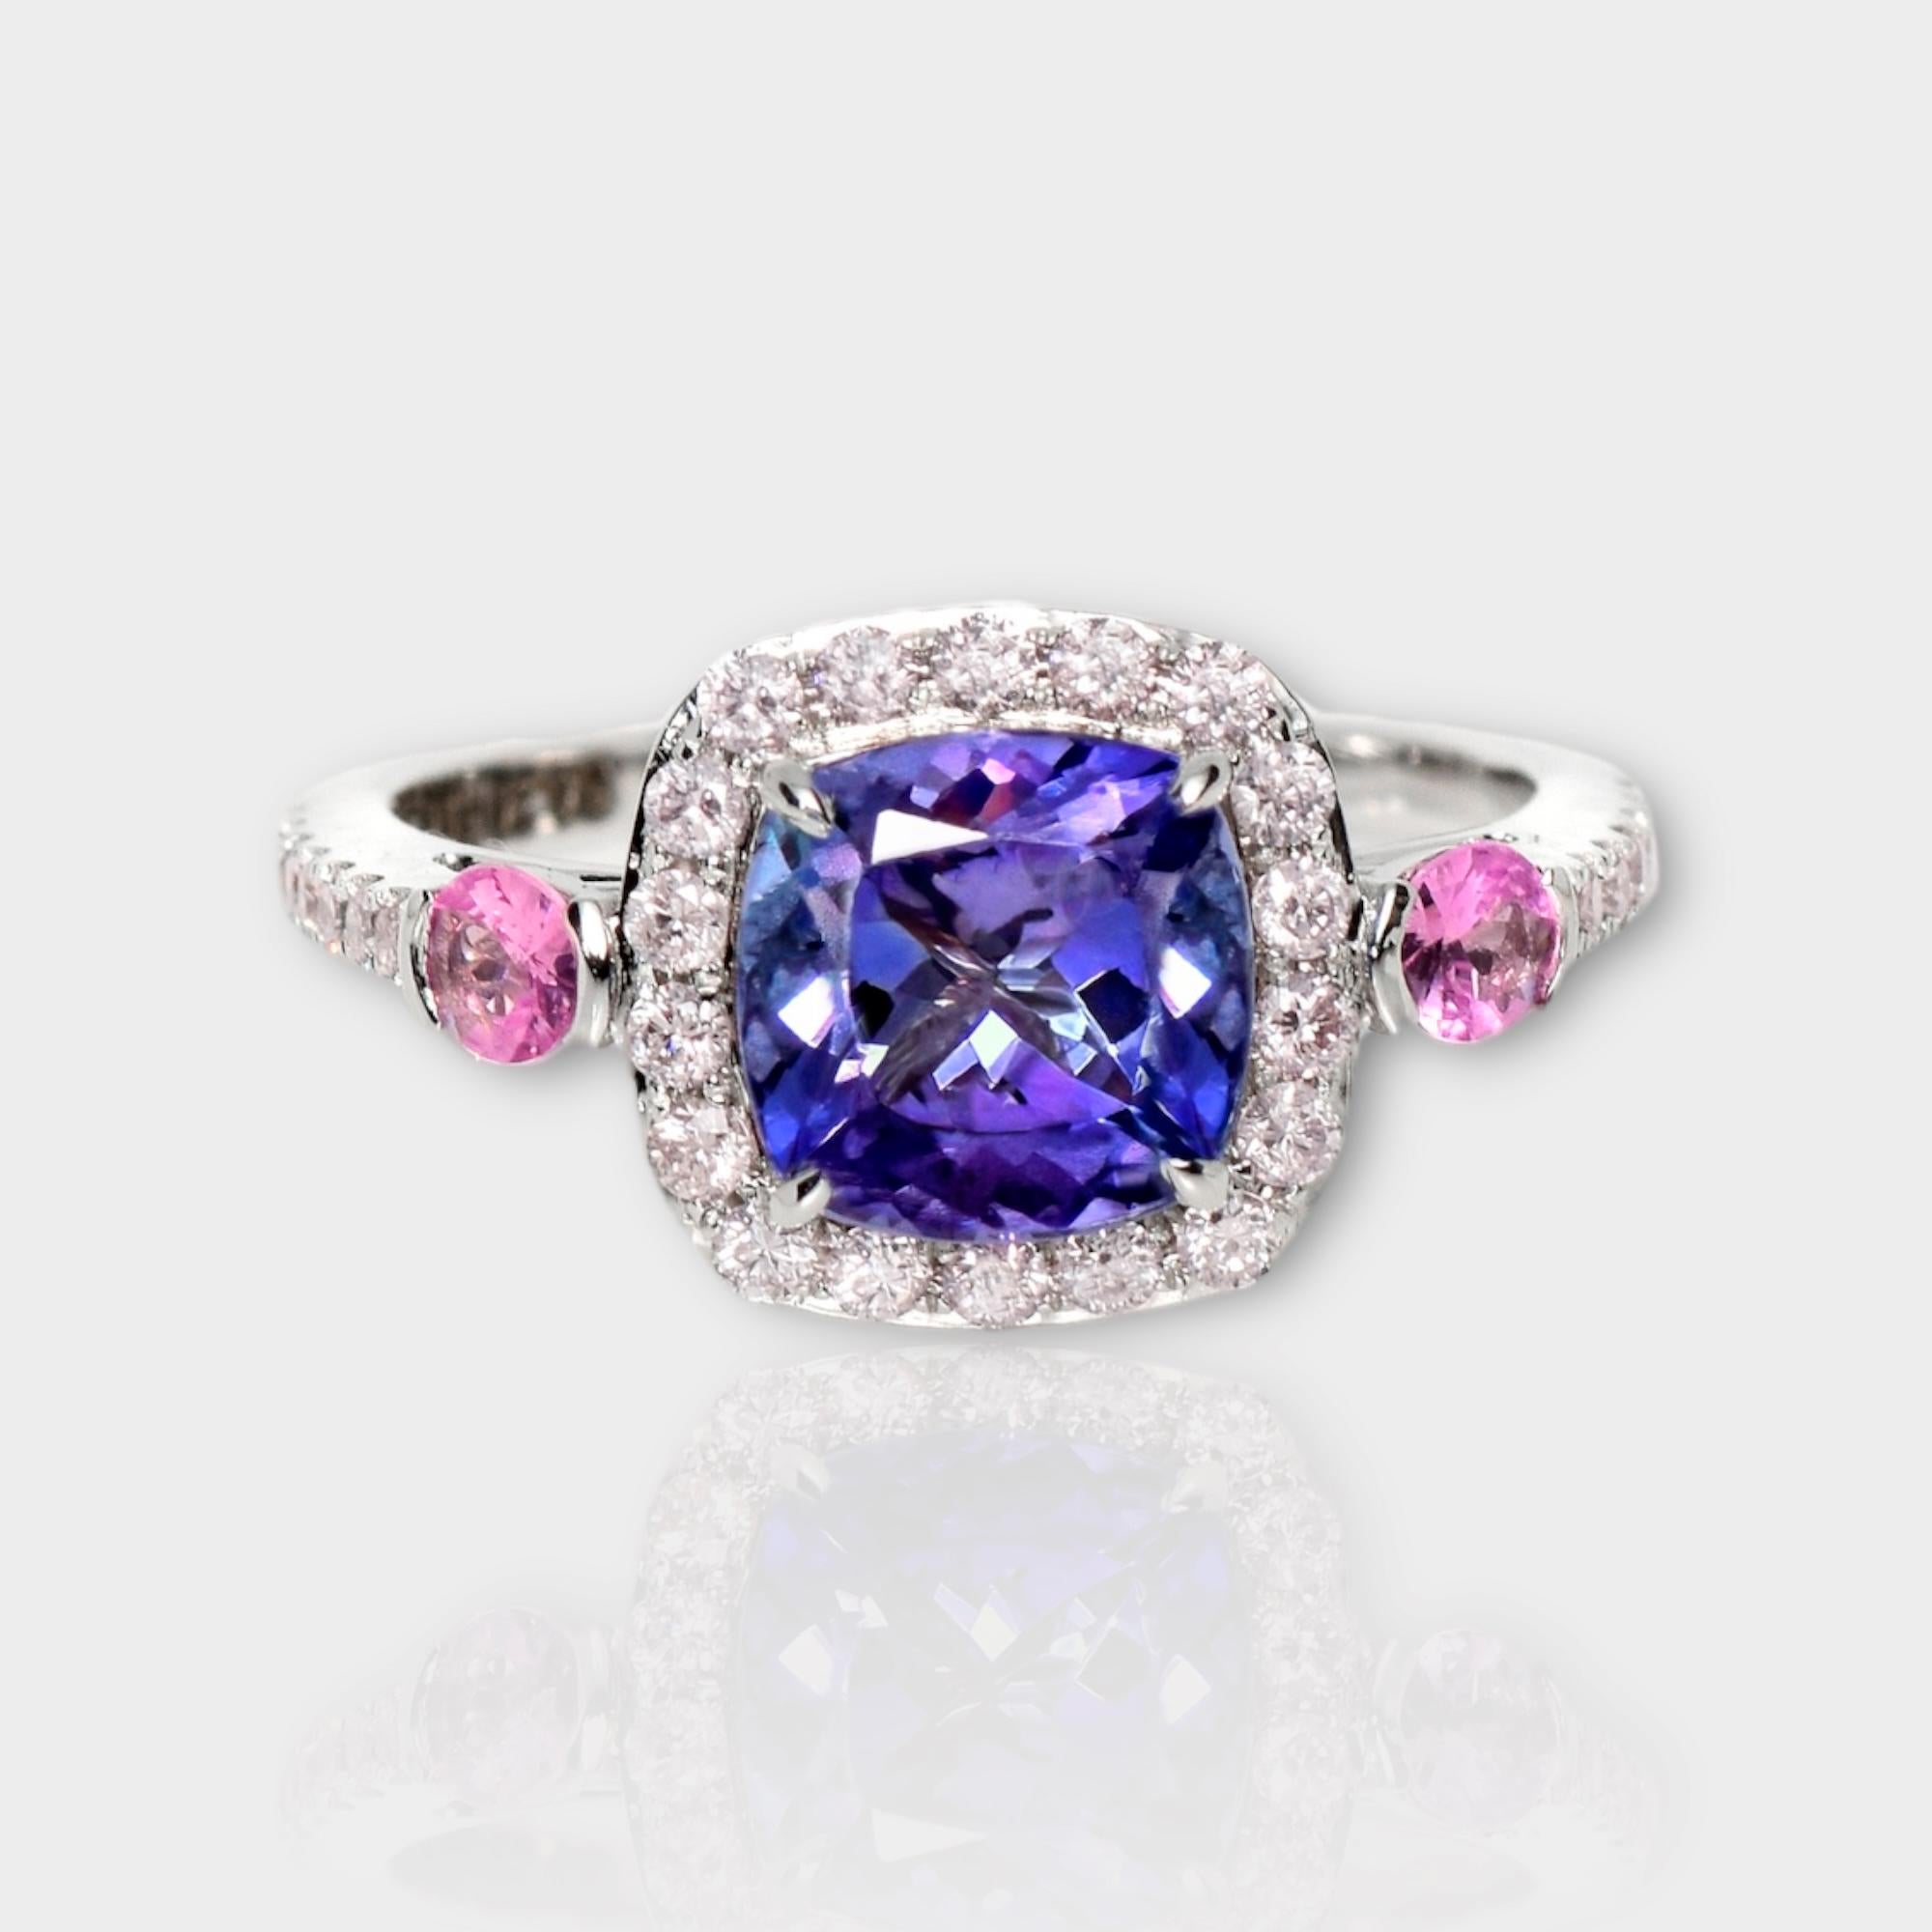 *IGI 14K 1.87 ct Tanzanite&Pink Diamond Antique Art Deco Style Engagement Ring*
The natural intense bluish violet tanzanite, weighing 1.87 ct, is the center stone surrounded by natural pink diamonds weighing 0.41 ct on the 14K white gold halo design